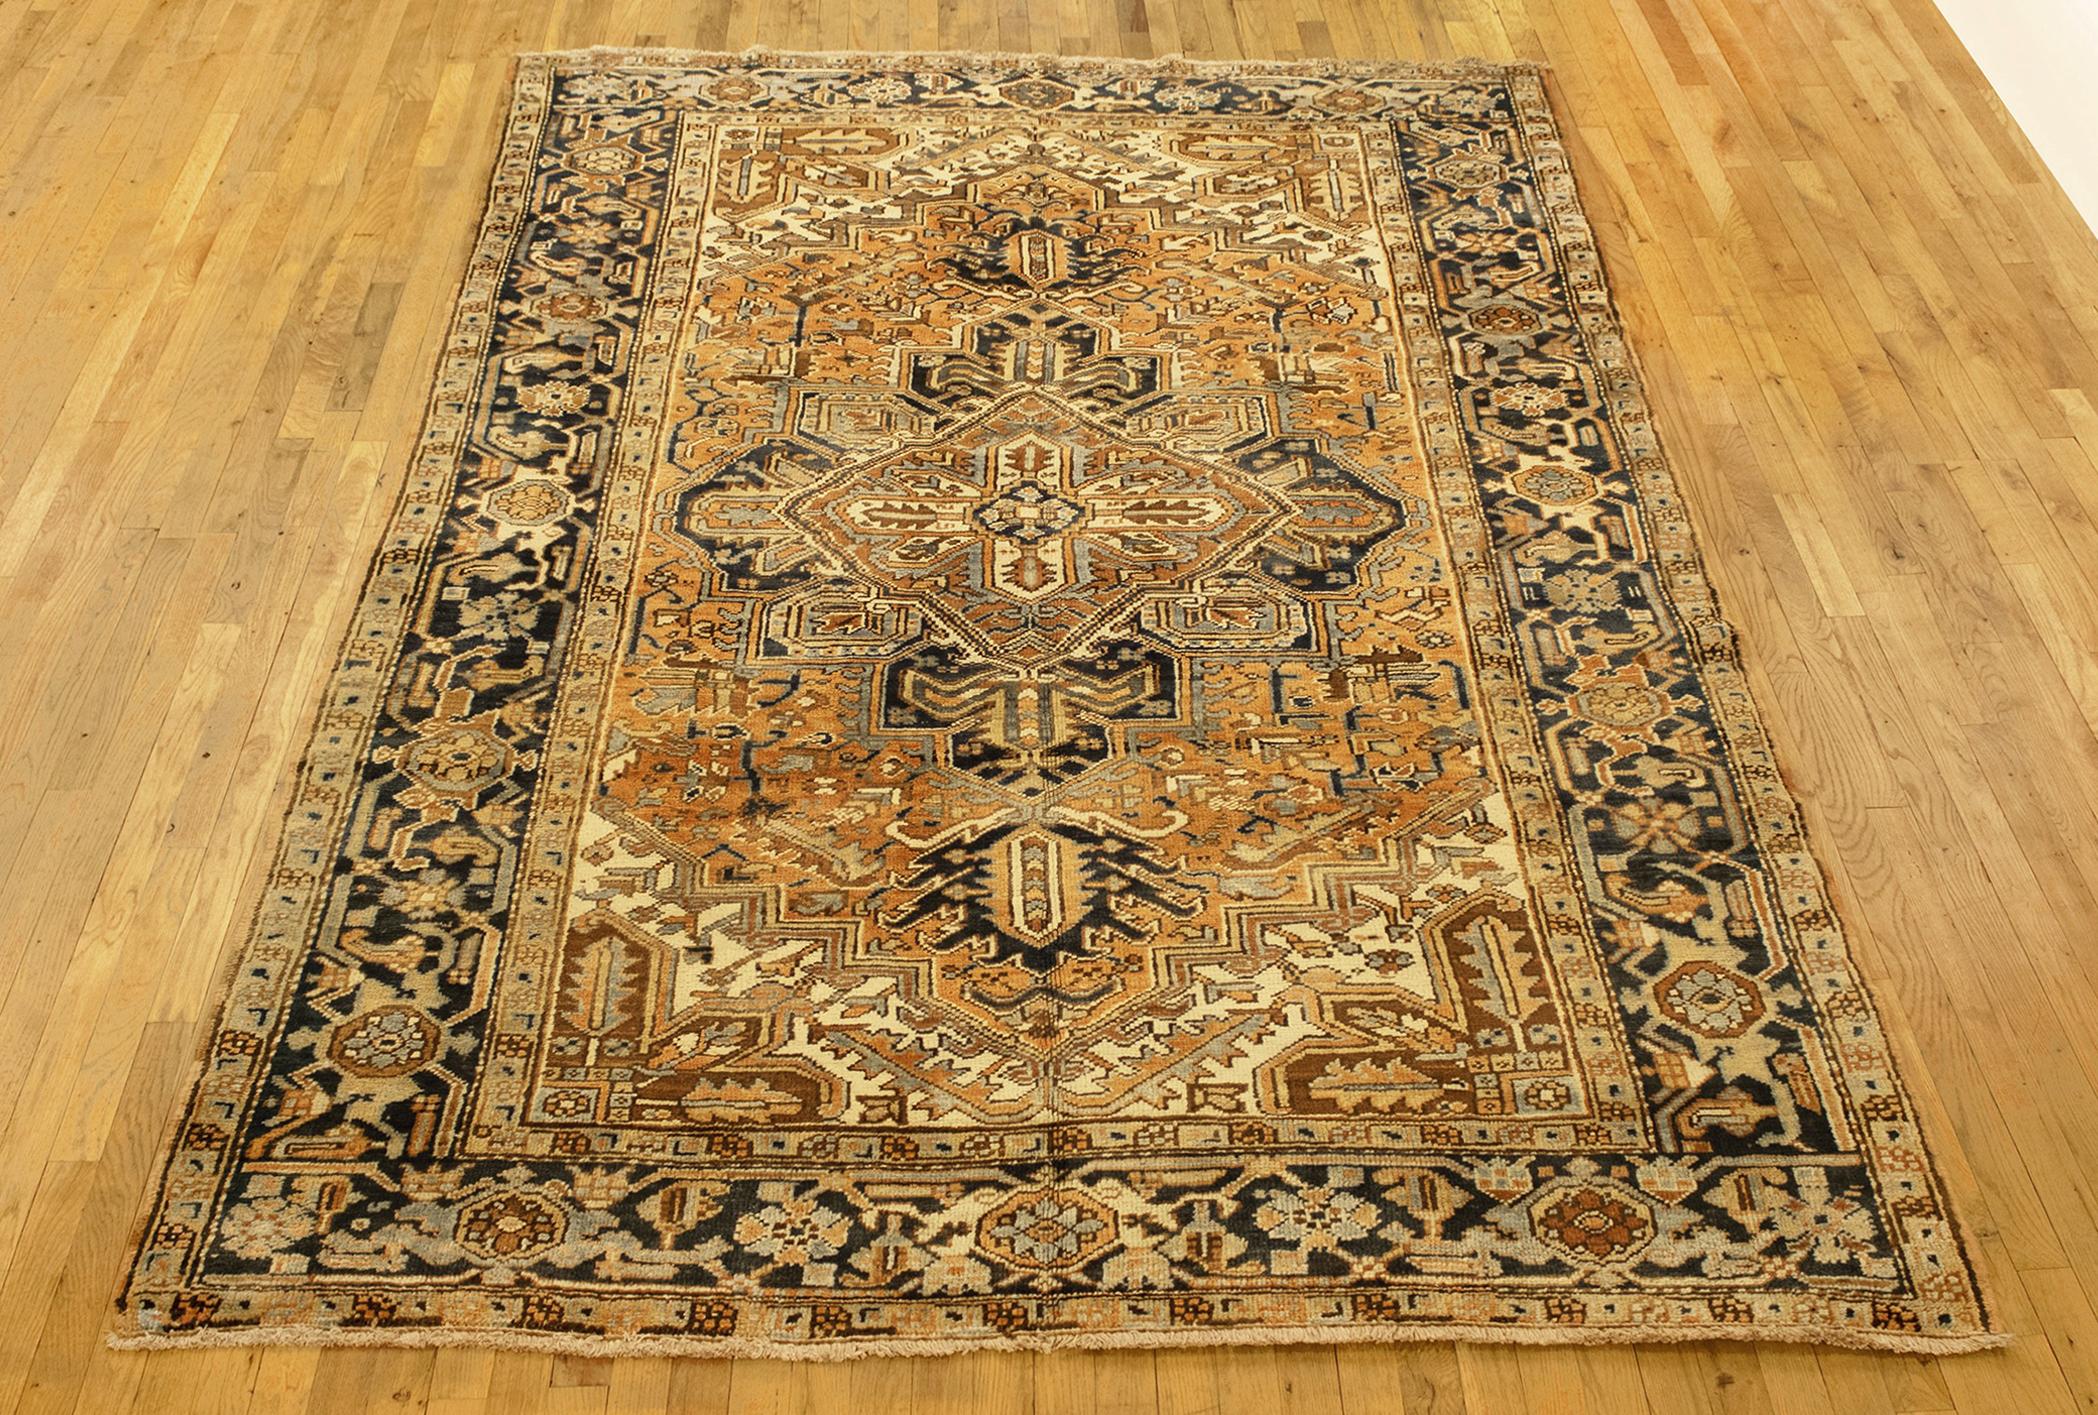 Vintage Persian Heriz Oriental rug, Room size

A vintage Persian Heriz oriental rug, size 9'8